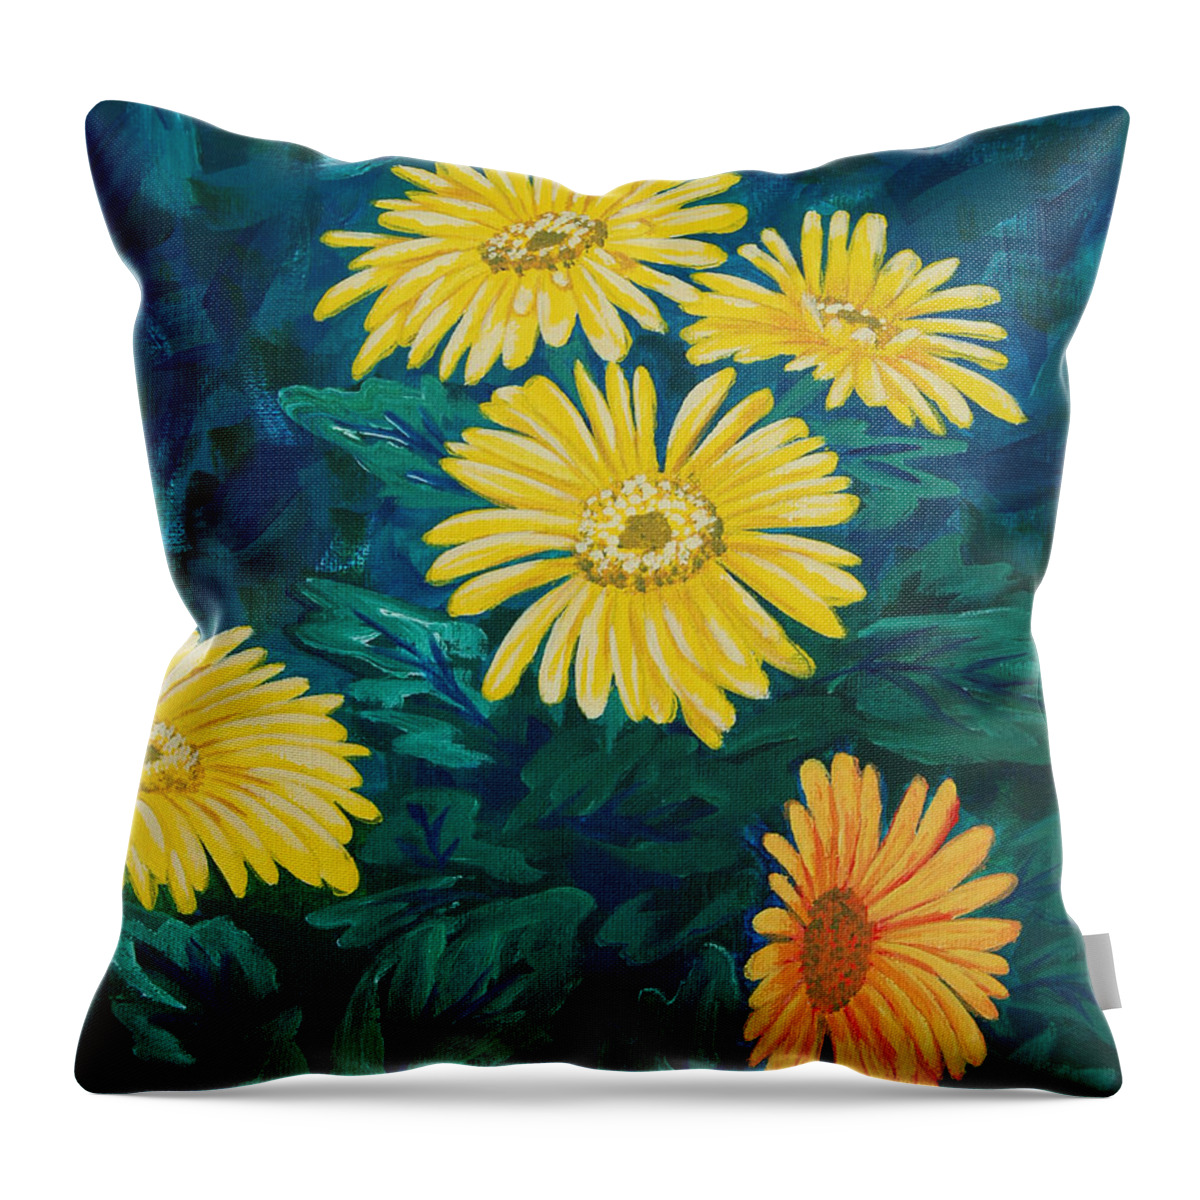 Flower Throw Pillow featuring the painting Mums by Cheryl Fecht